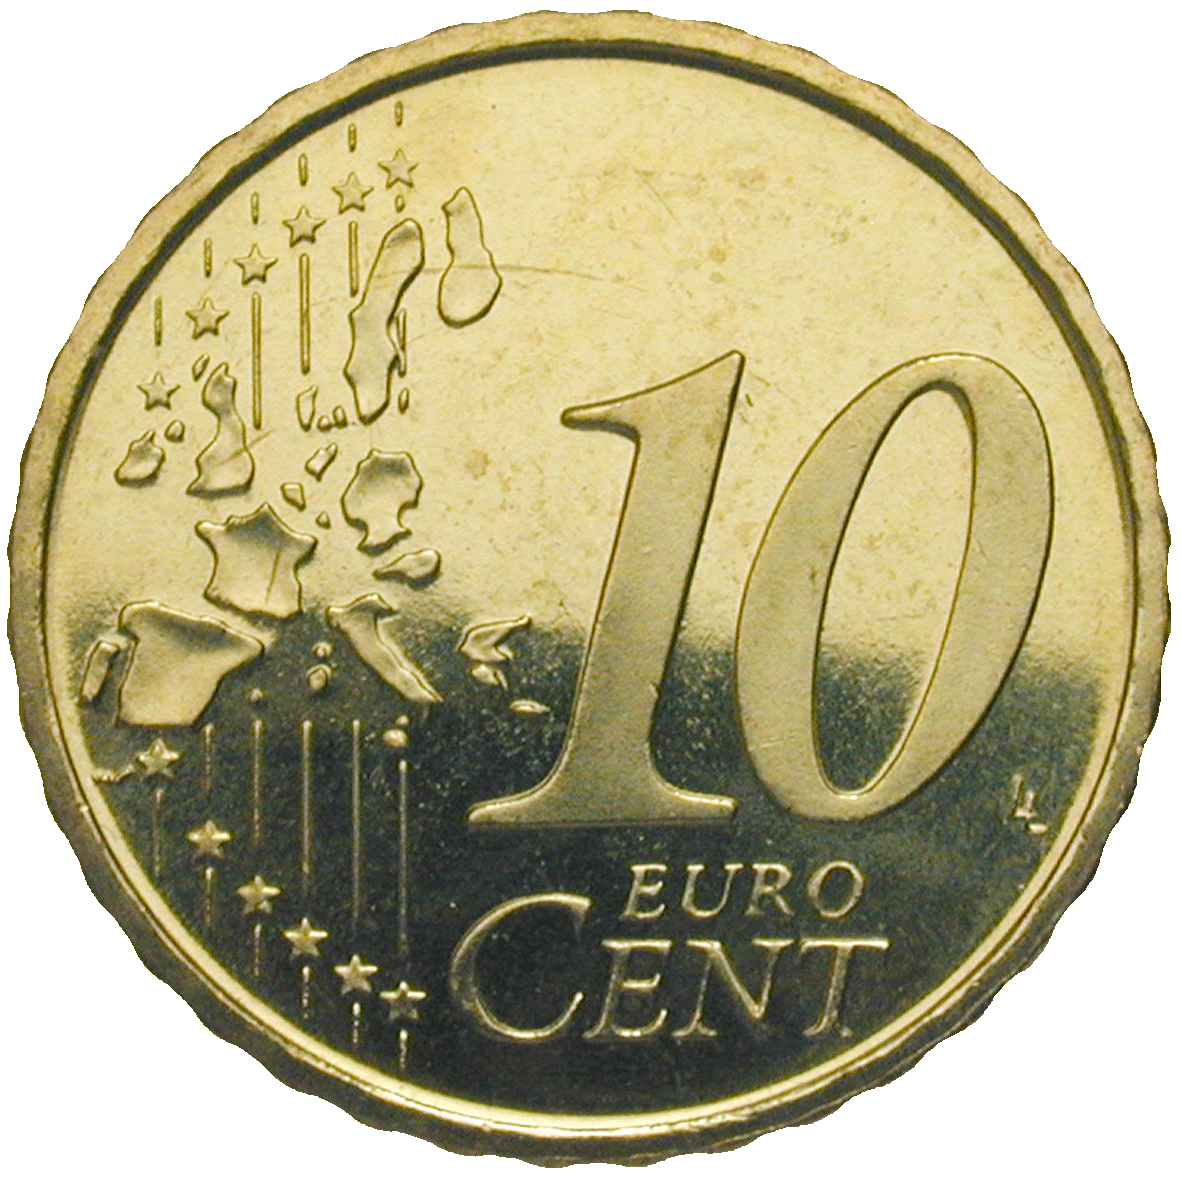 Königreich Spanien, Juan Carlos, 10 Eurocent 2004 (reverse)